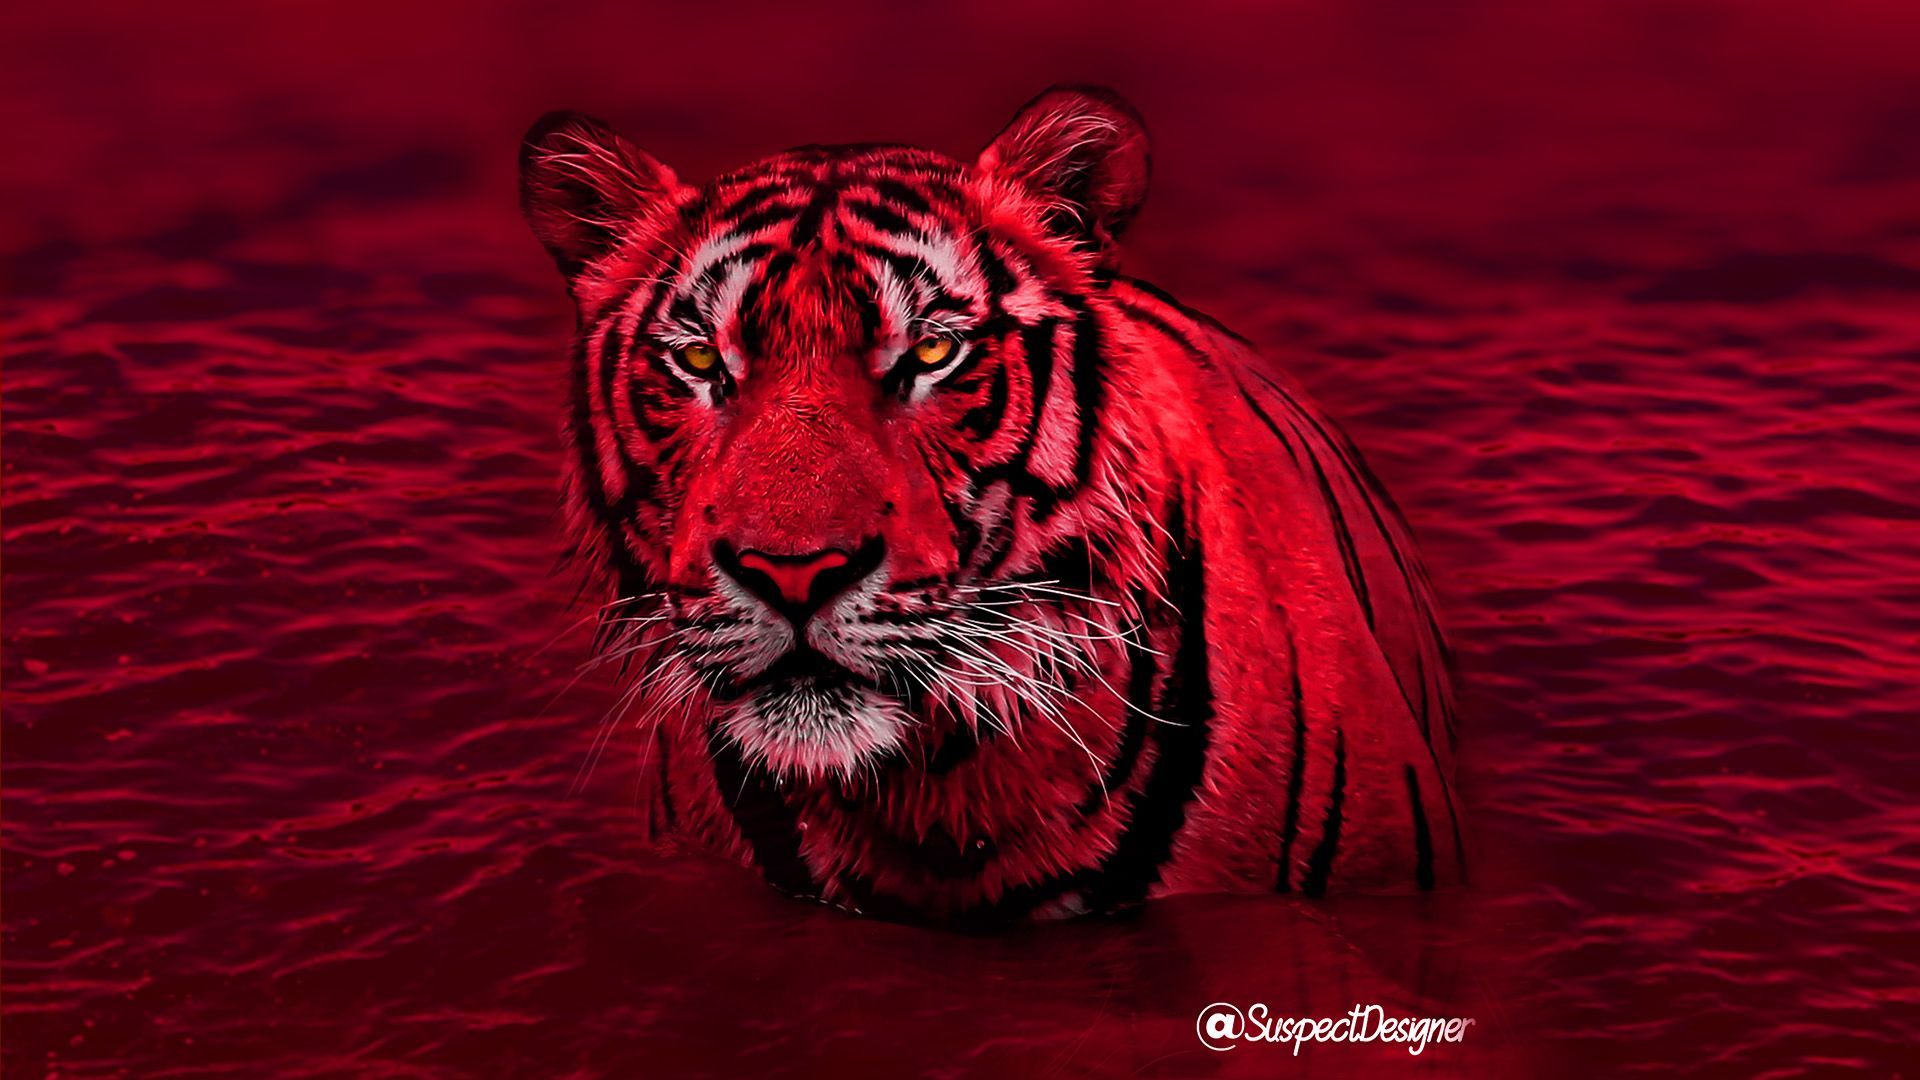 Ред тайгер. Красный тигр. Тигр на Красном фоне. Красная тигрица.